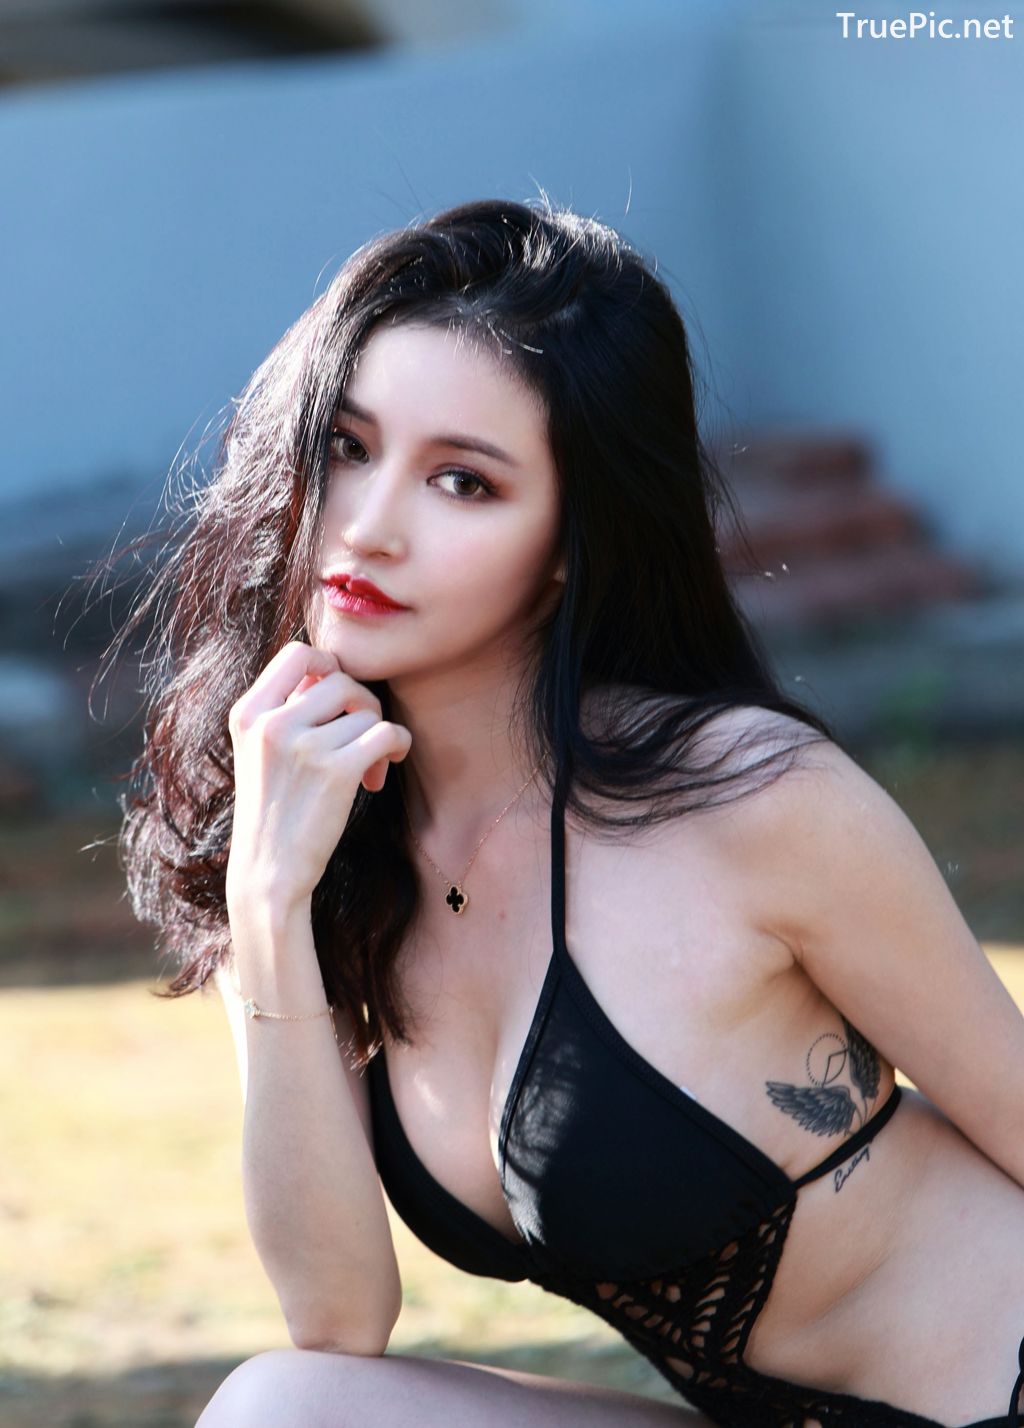 Image-Taiwanese-Model-艾薉-Long-Legs-And-Lovely-Bikini-Girl-TruePic.net- Picture-24